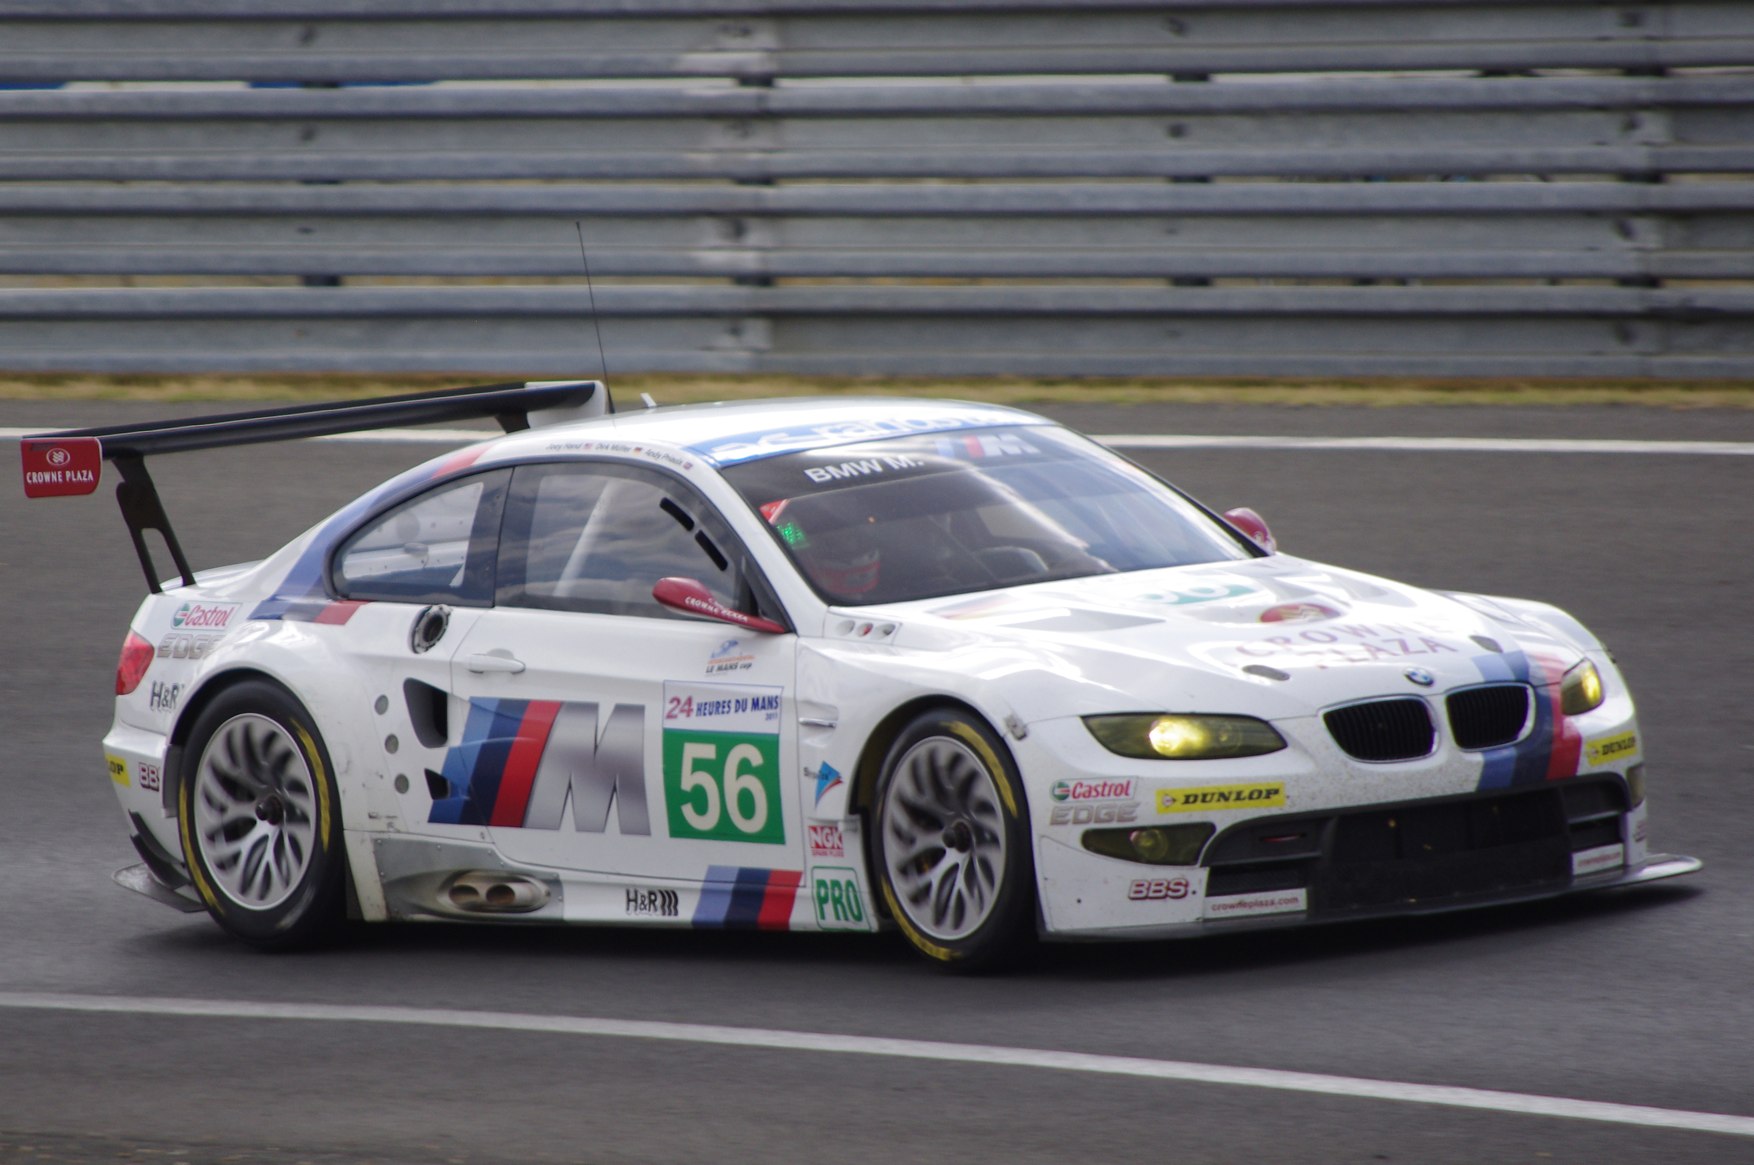 Andy_Prialux_Dirk_Muller_Joey_Hand_BMW_Motorsport_LMGTE_Pro_BMW_M3_Le_Mans_2011.jpg